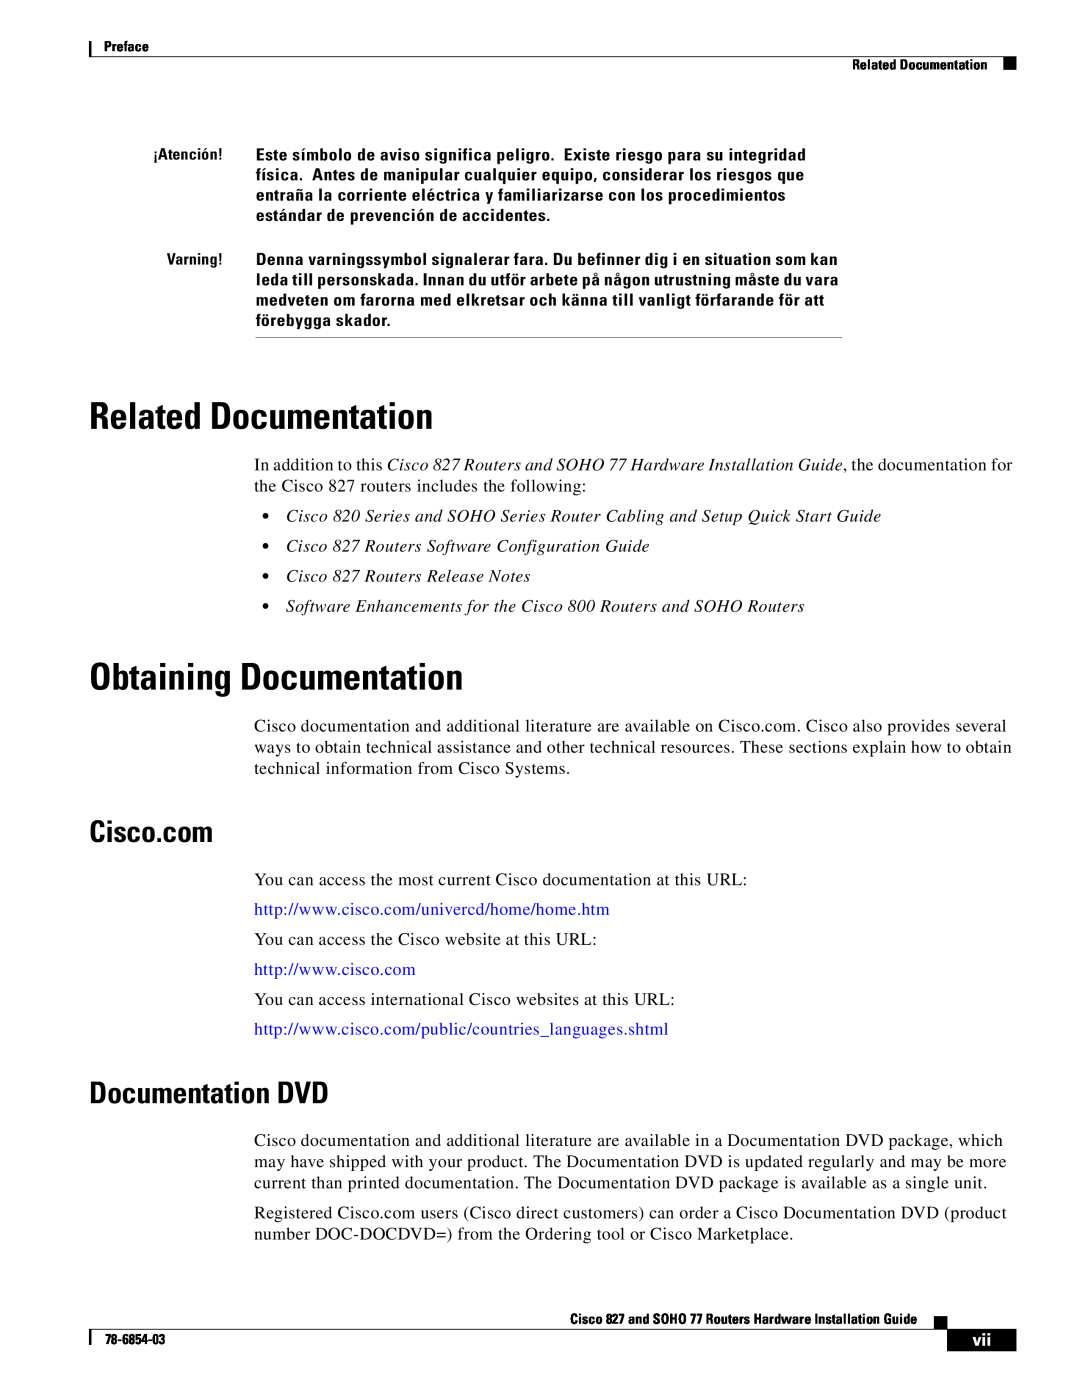 Cisco Systems SOHO 77 manual Related Documentation, Obtaining Documentation, Cisco.com, Documentation DVD 